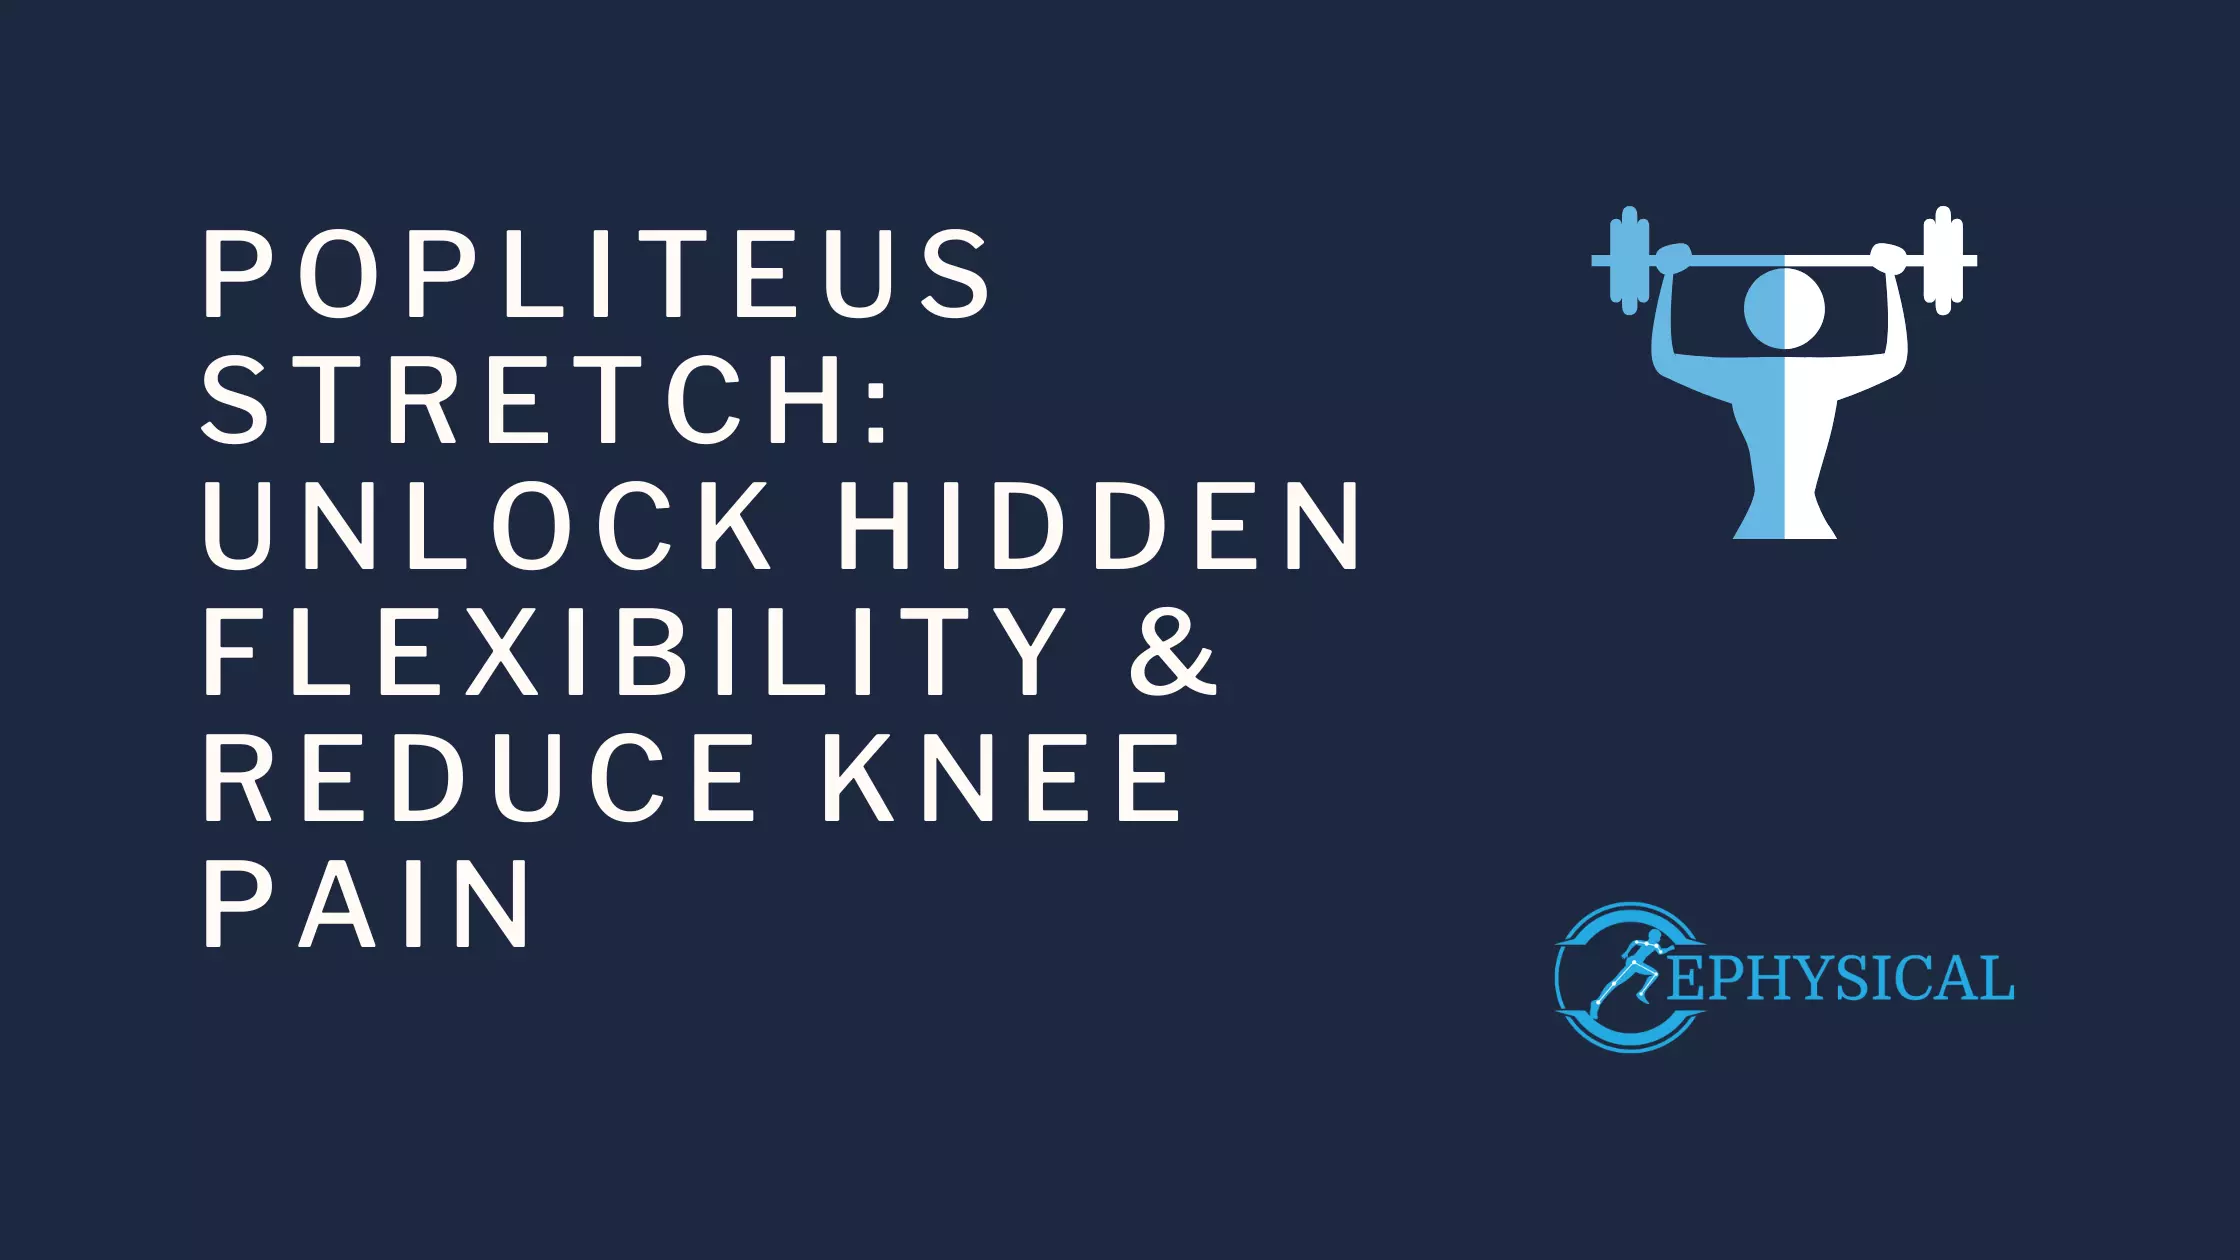 Popliteus Stretch Unlock Hidden Flexibility Reduce Knee Pain